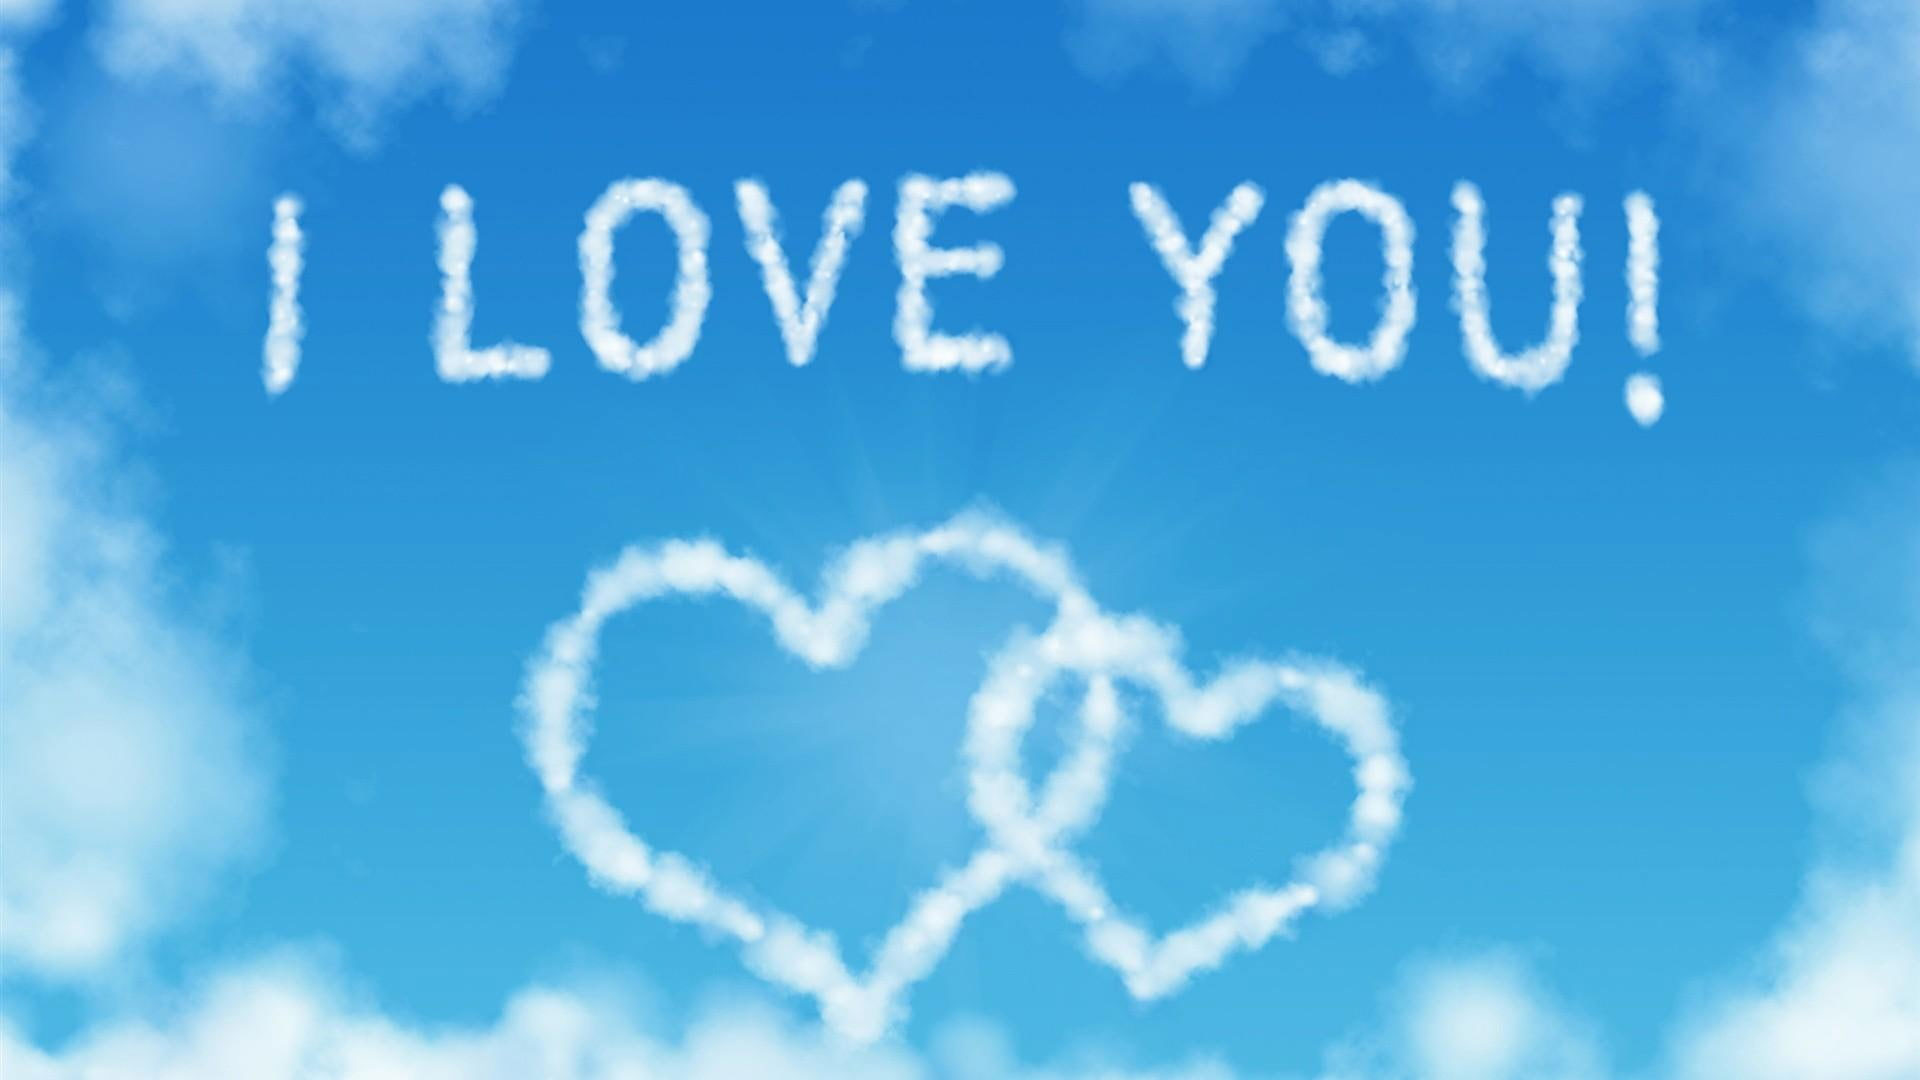 Love wallpaper, i love you, clouds, heart, hearts, romantic